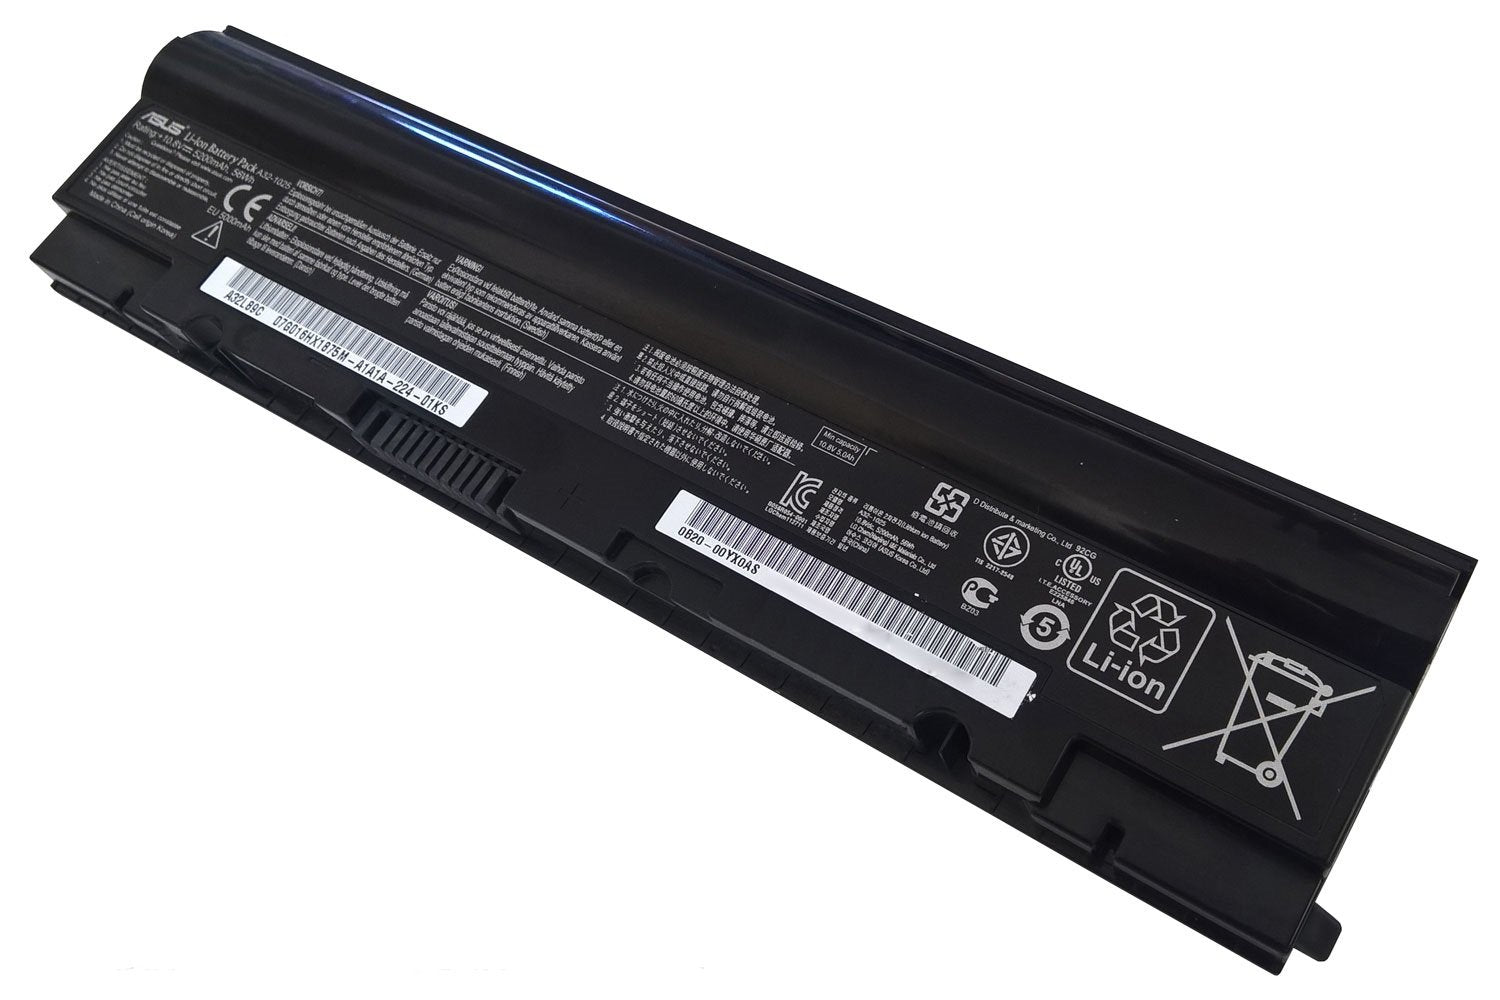 Original Laptop Battery For Asus Eee PC R052 Series, A31-1025b 07G016HF1875 A31-1025 A31-1025c Eee PC 1025C 1011CX 1225 1015E 1225B 1025 Eee PC